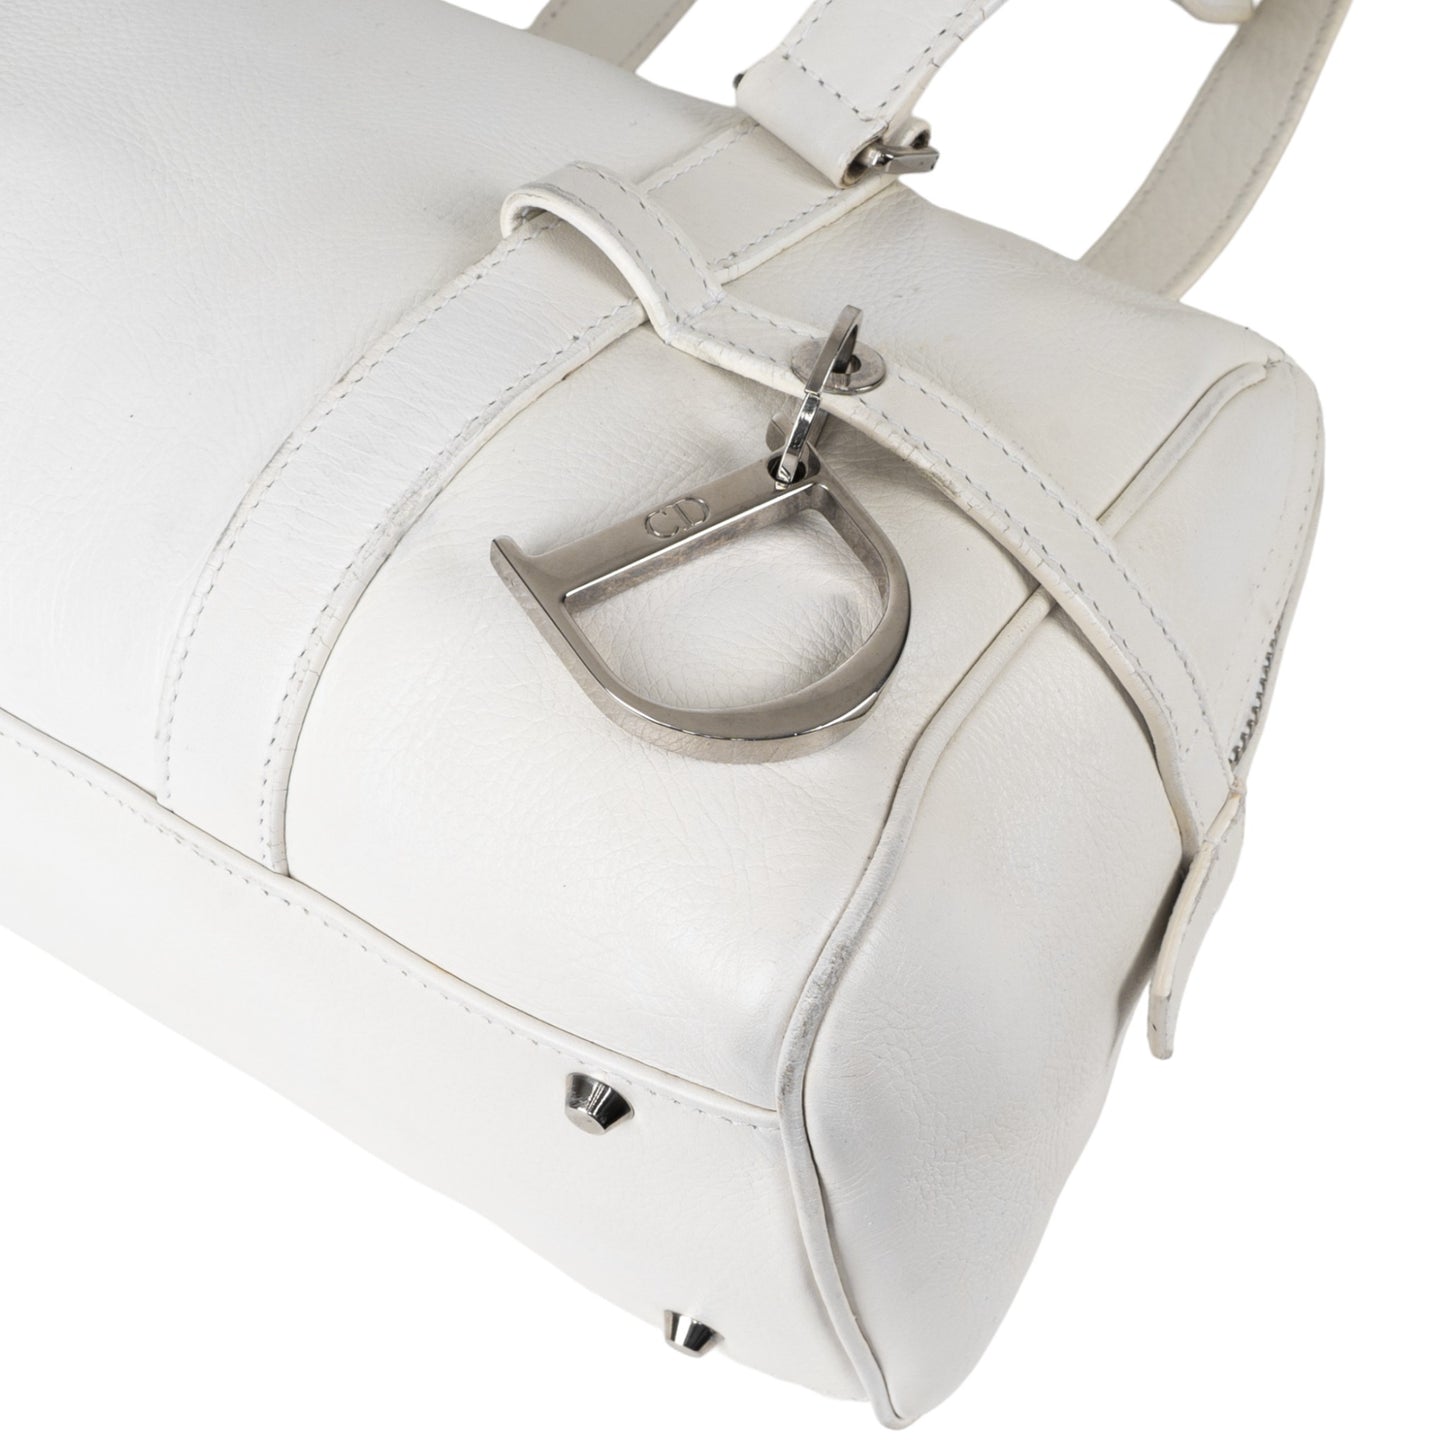 Christian Dior White Boston Leather Shoulder Bag